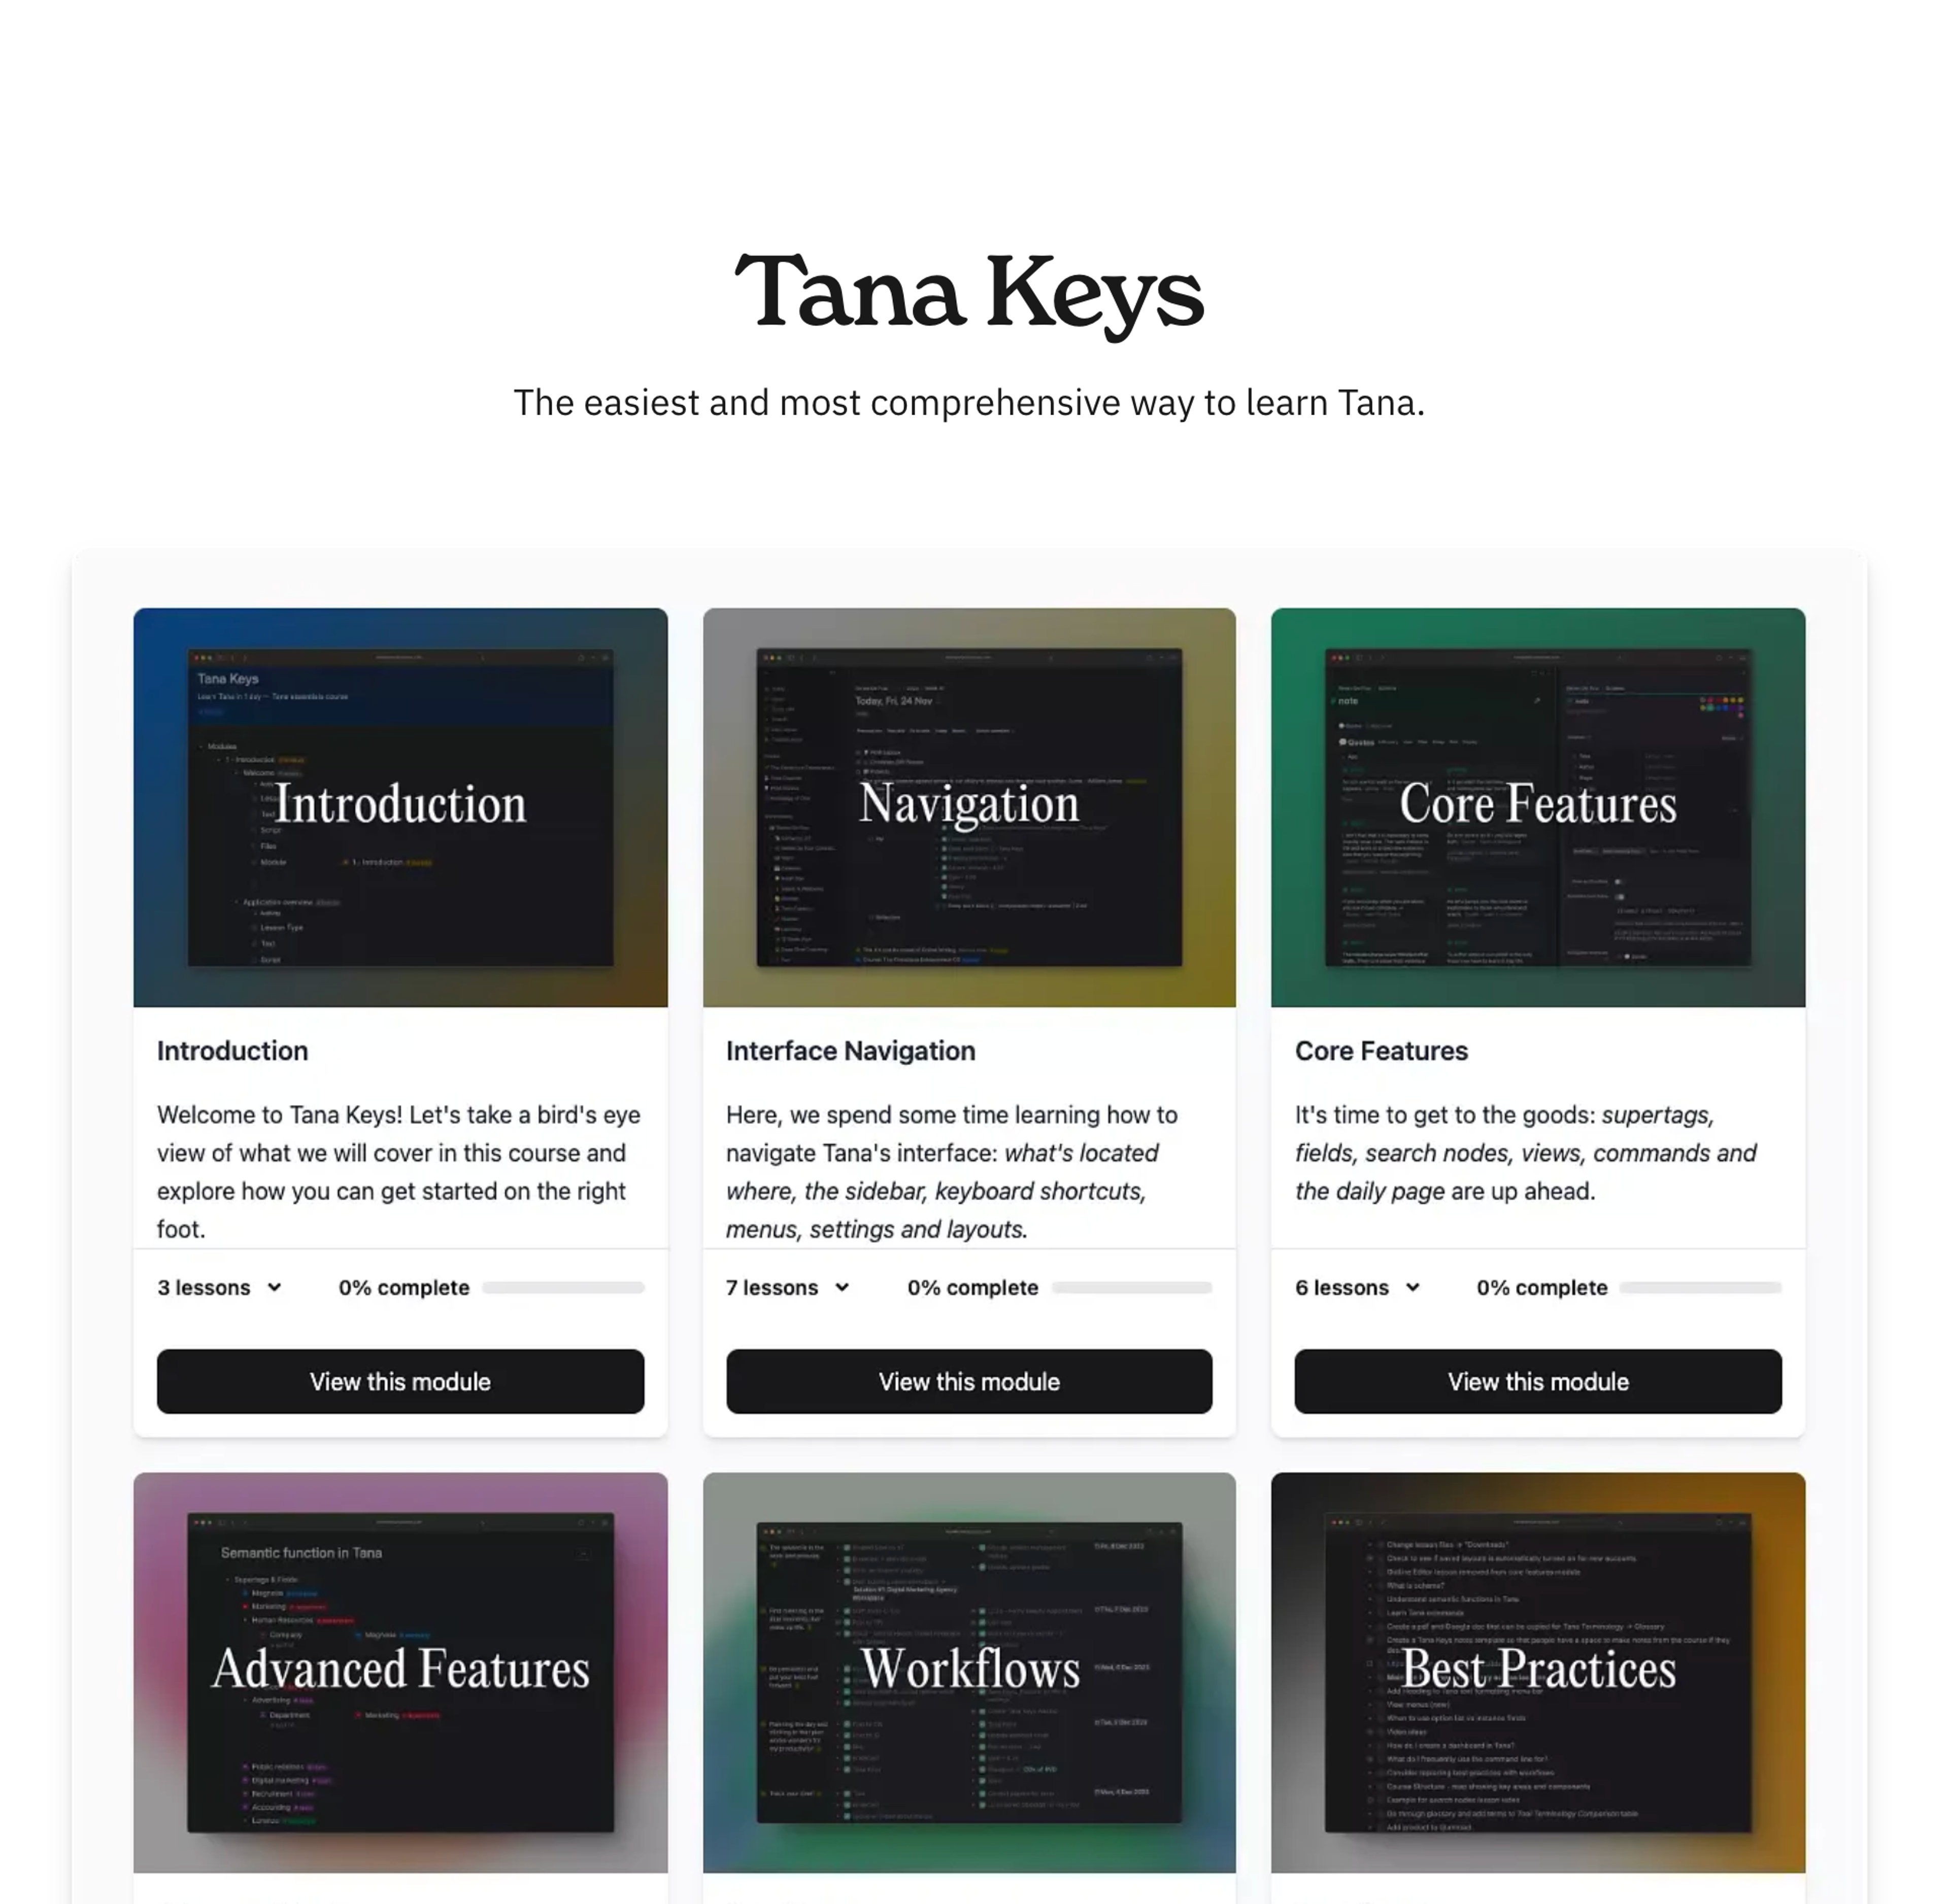 Tana keys